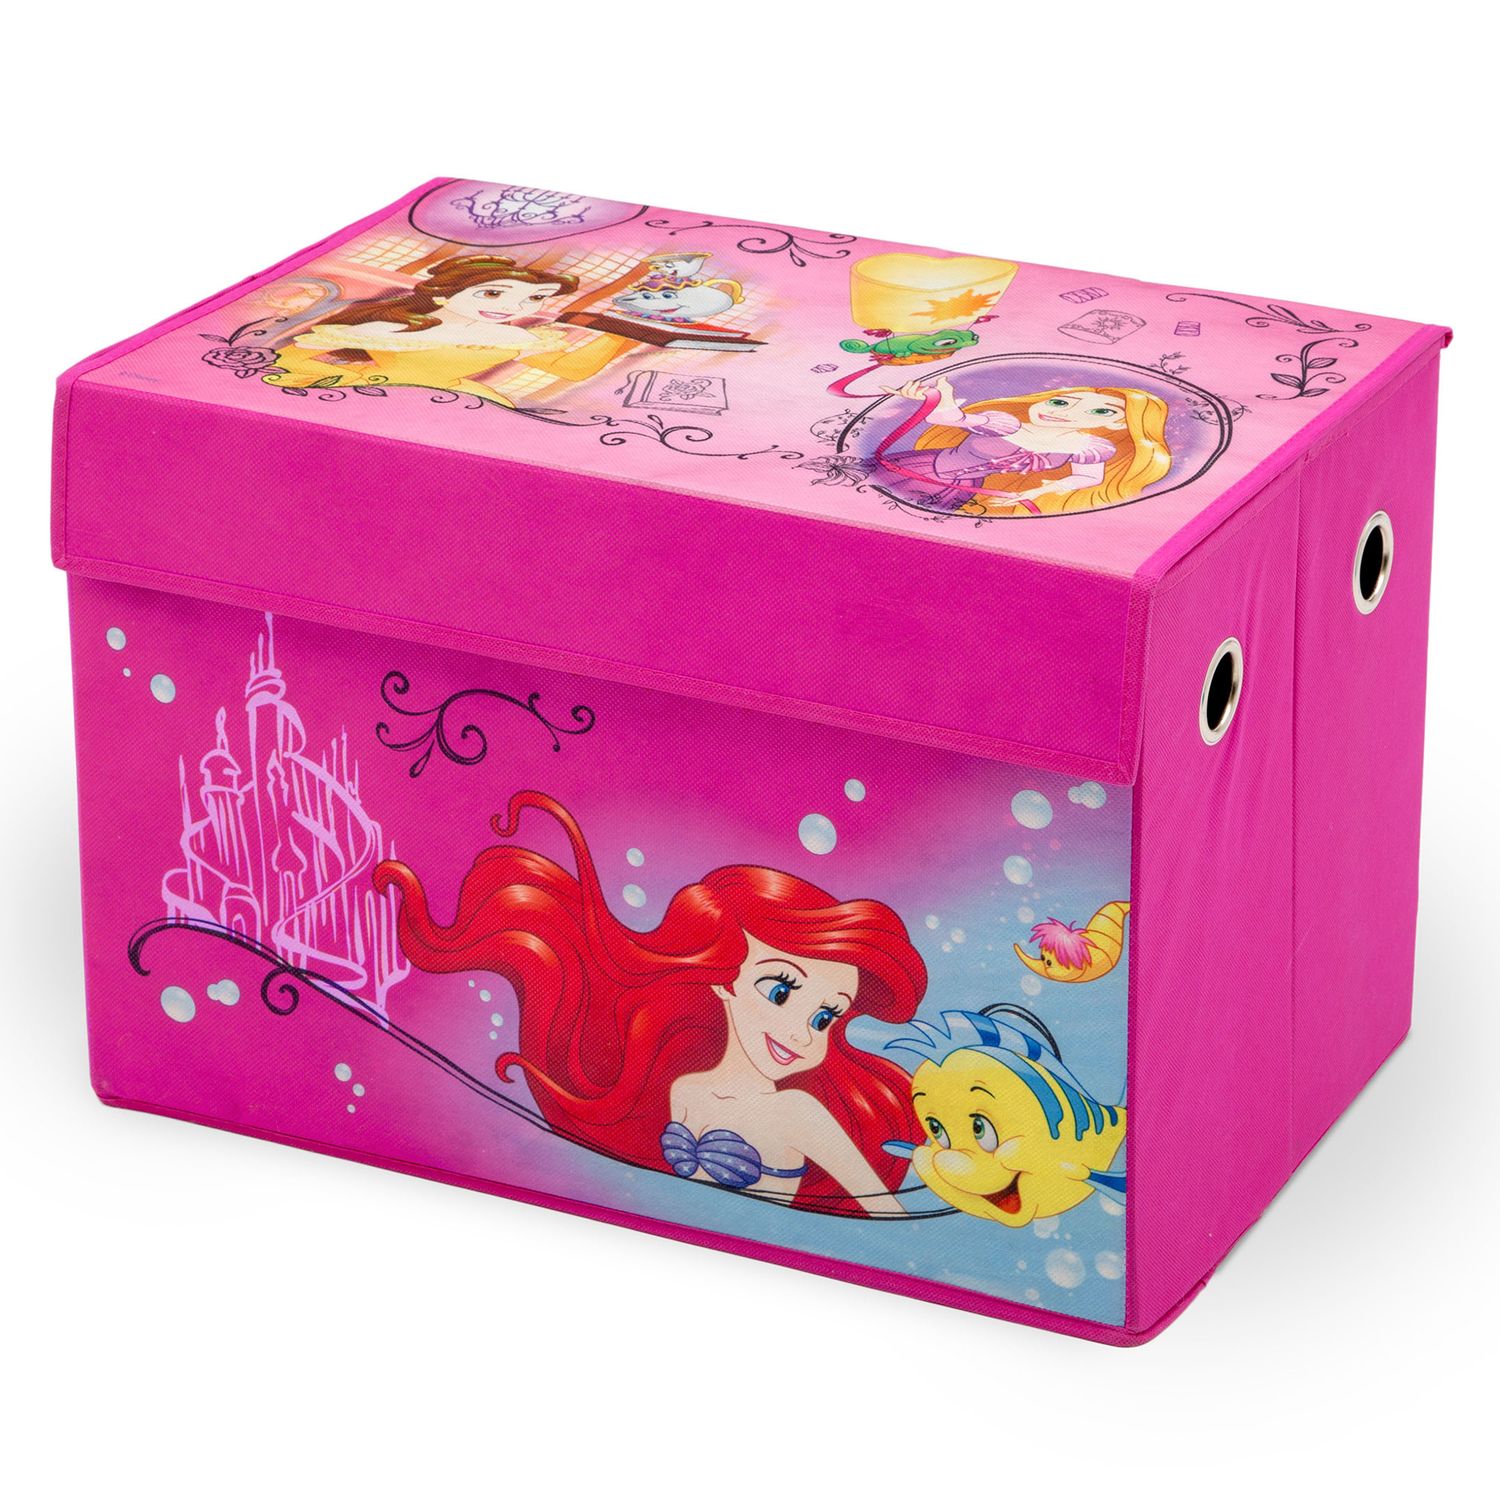 princess toy storage